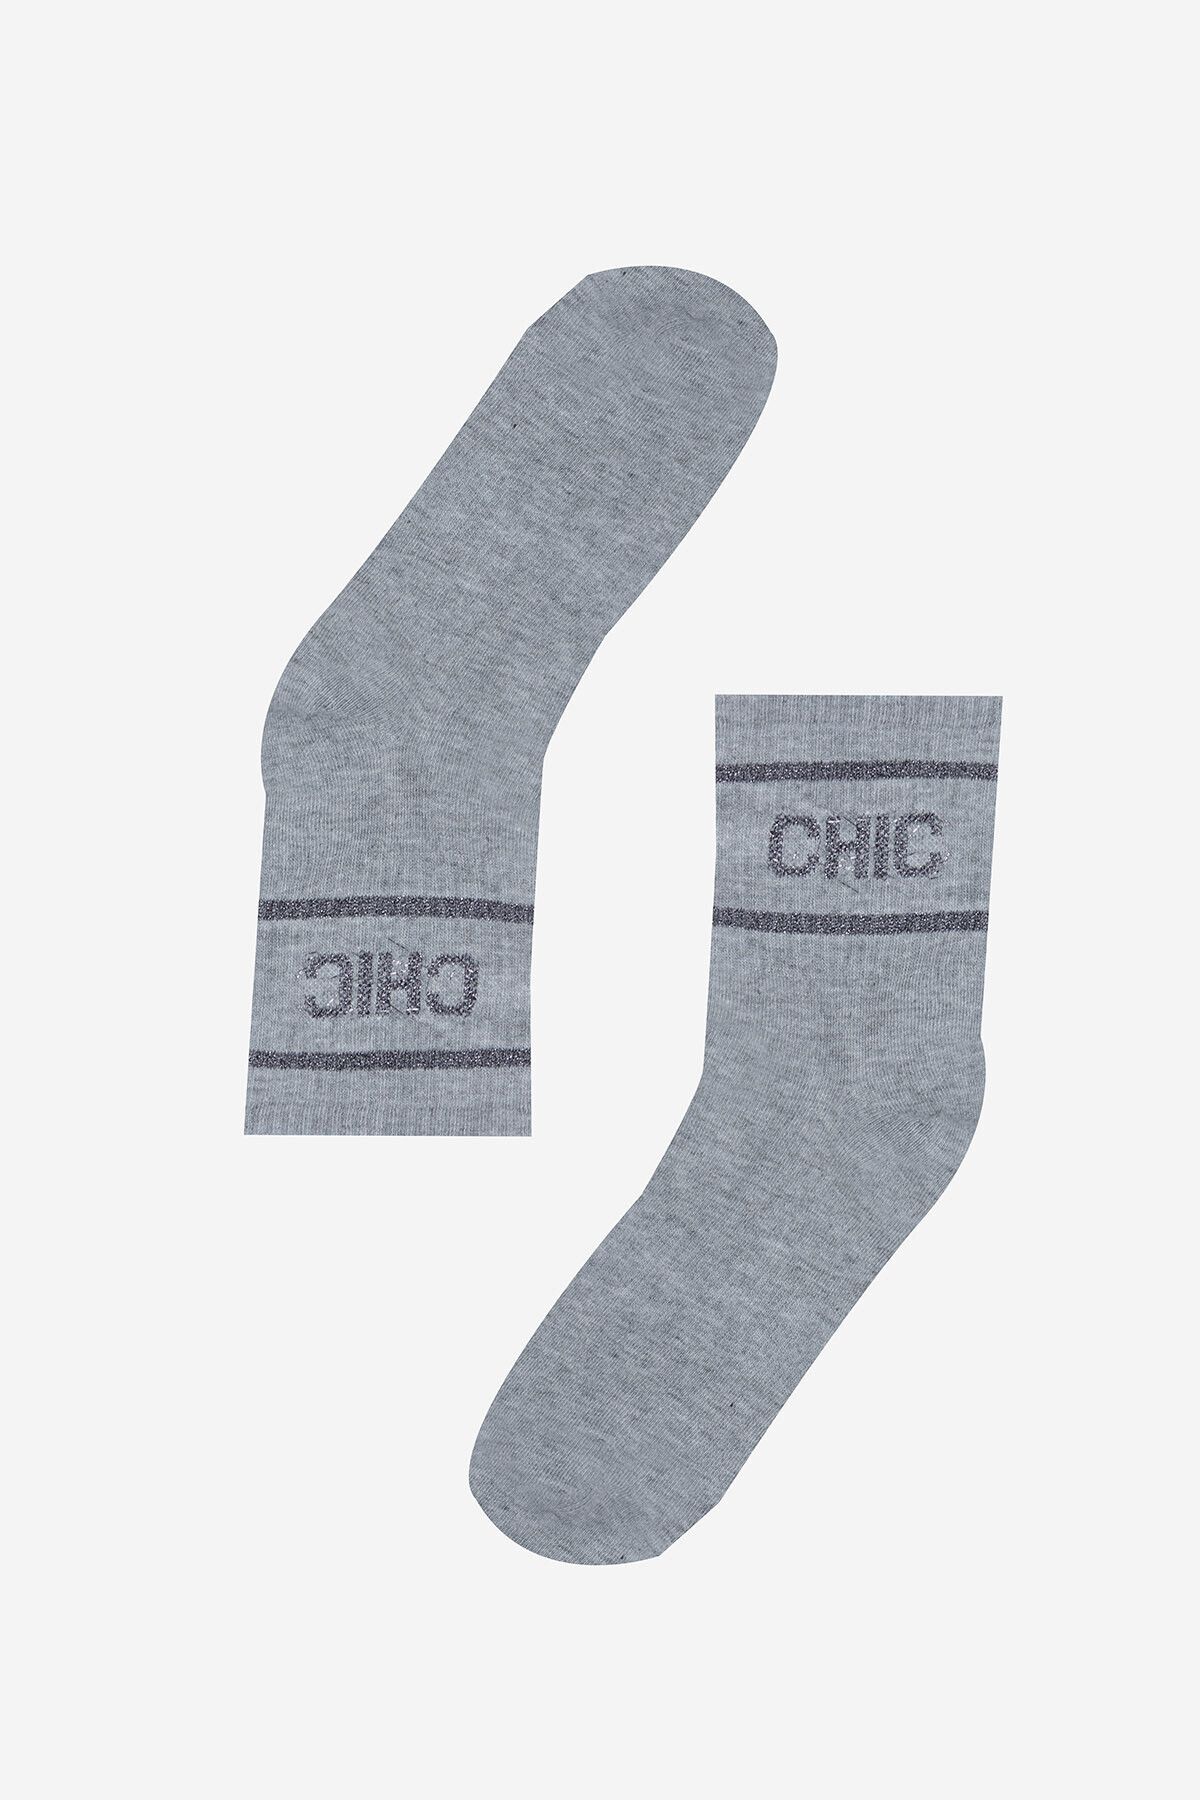 Nbb Gri Chic Slogan Baskılı Soket Çorap